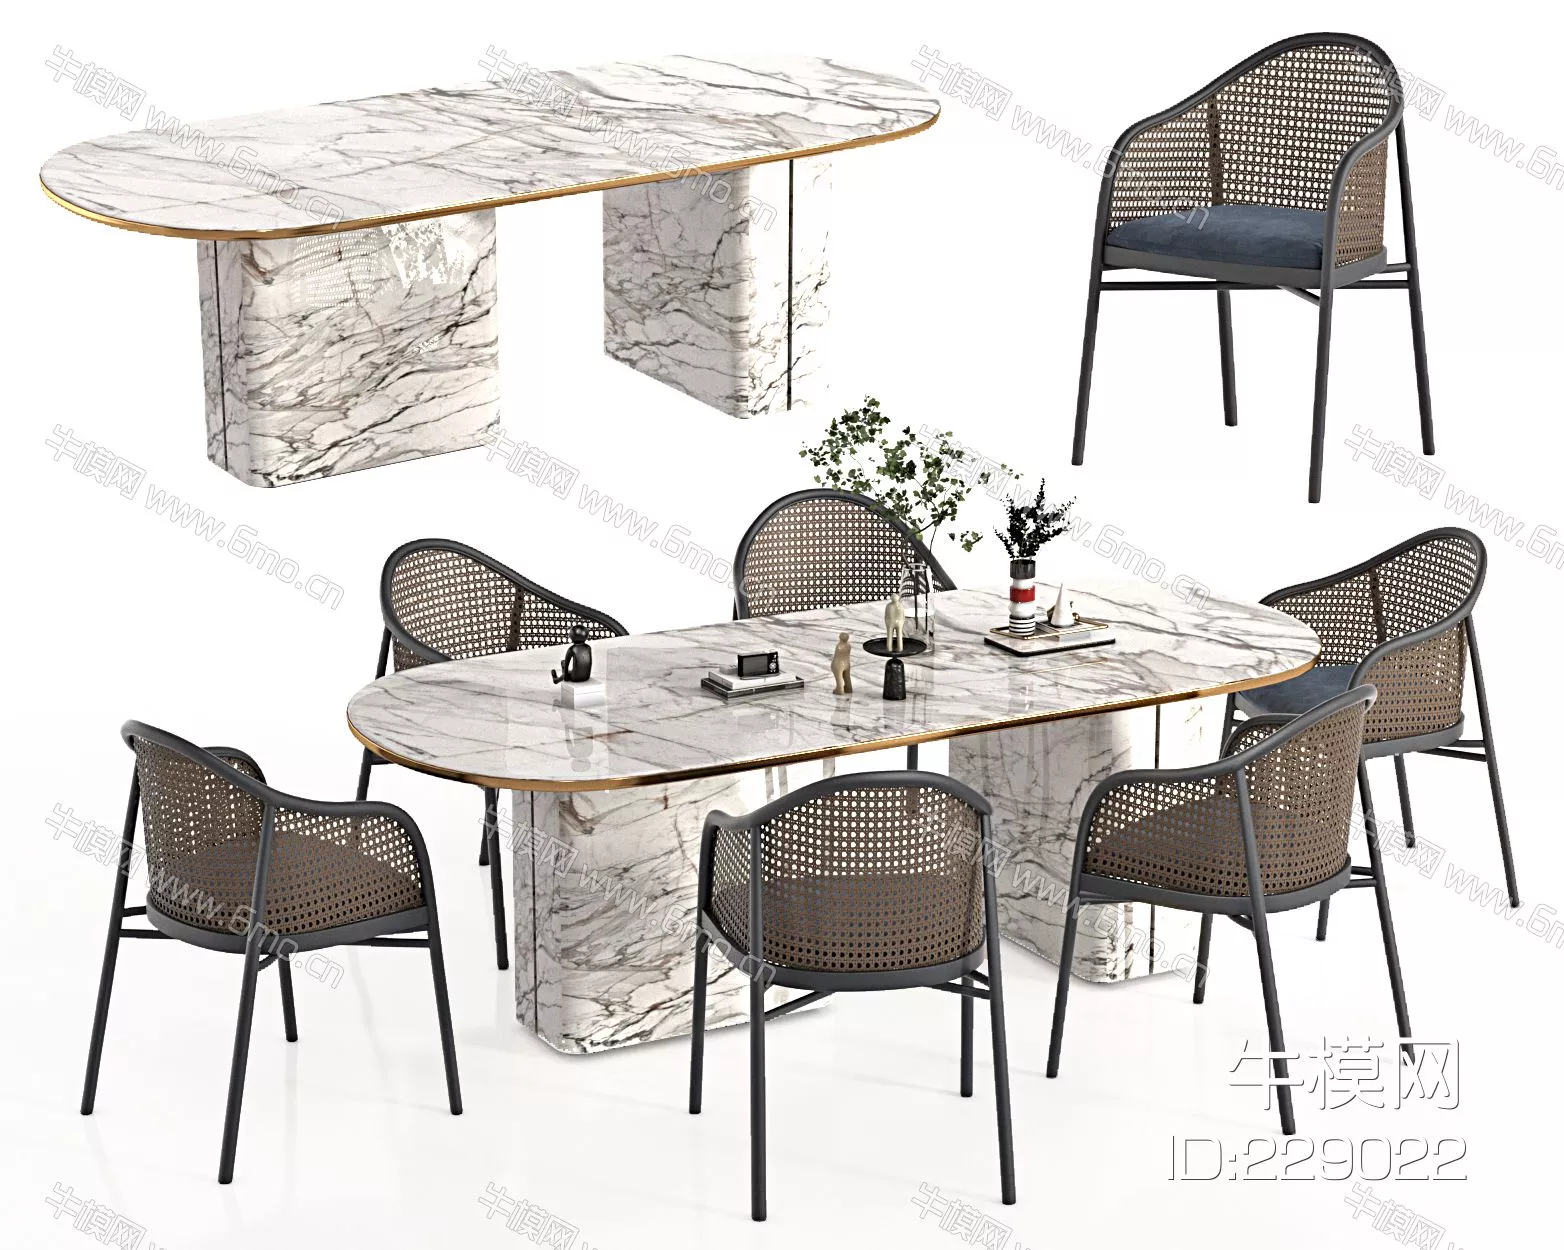 MODERN DINING TABLE SET - SKETCHUP 3D MODEL - VRAY - 229022